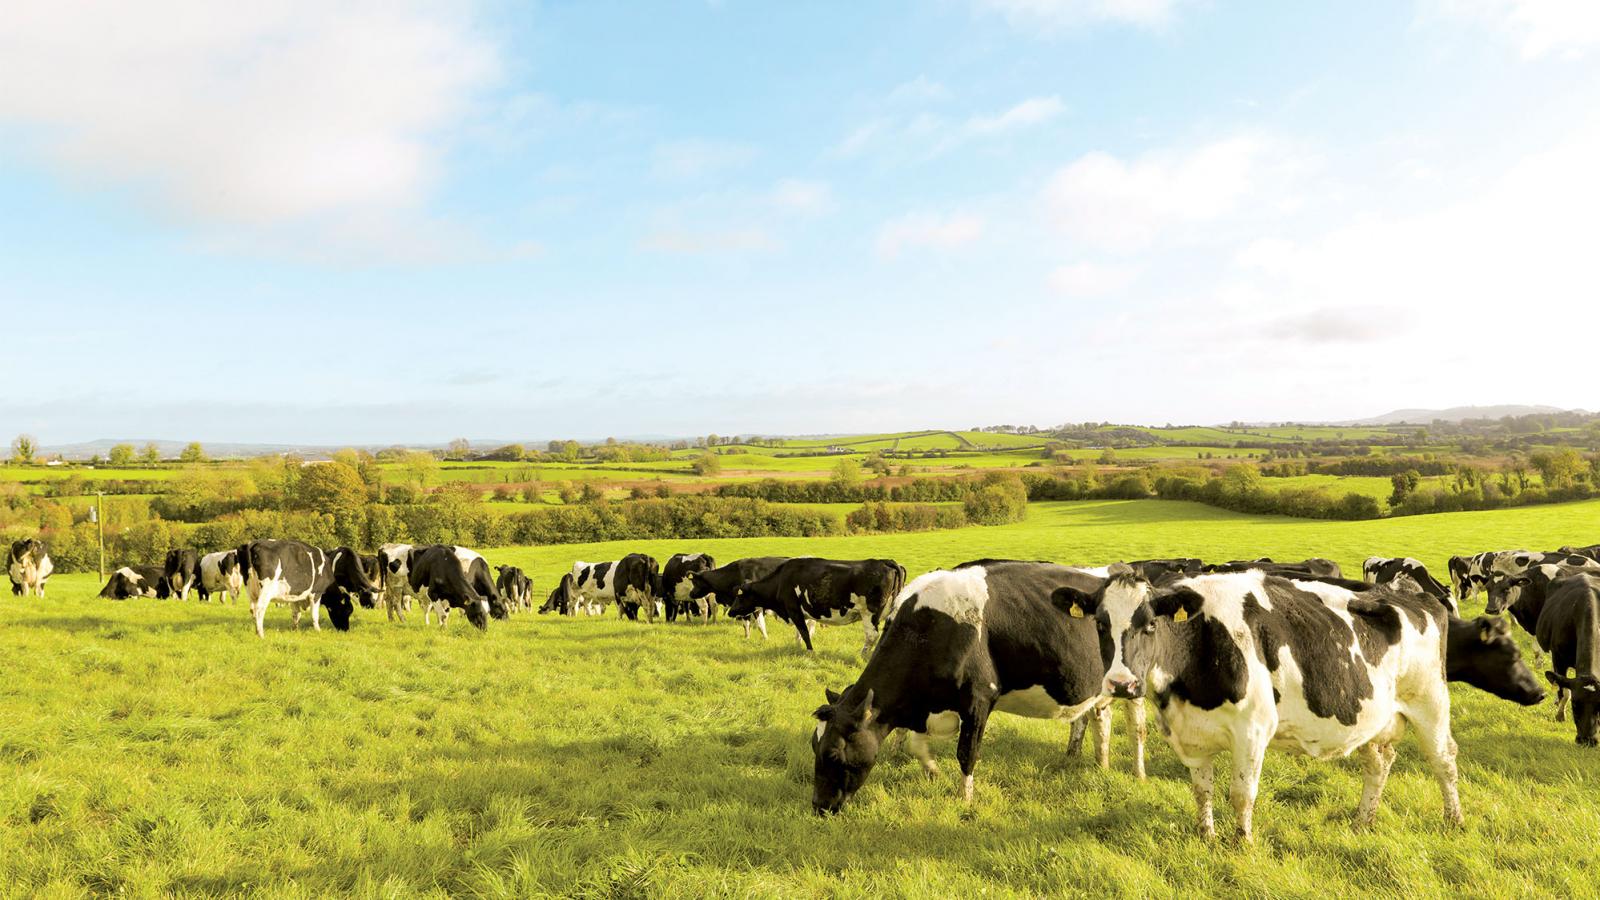 Irish cows grazing in a field